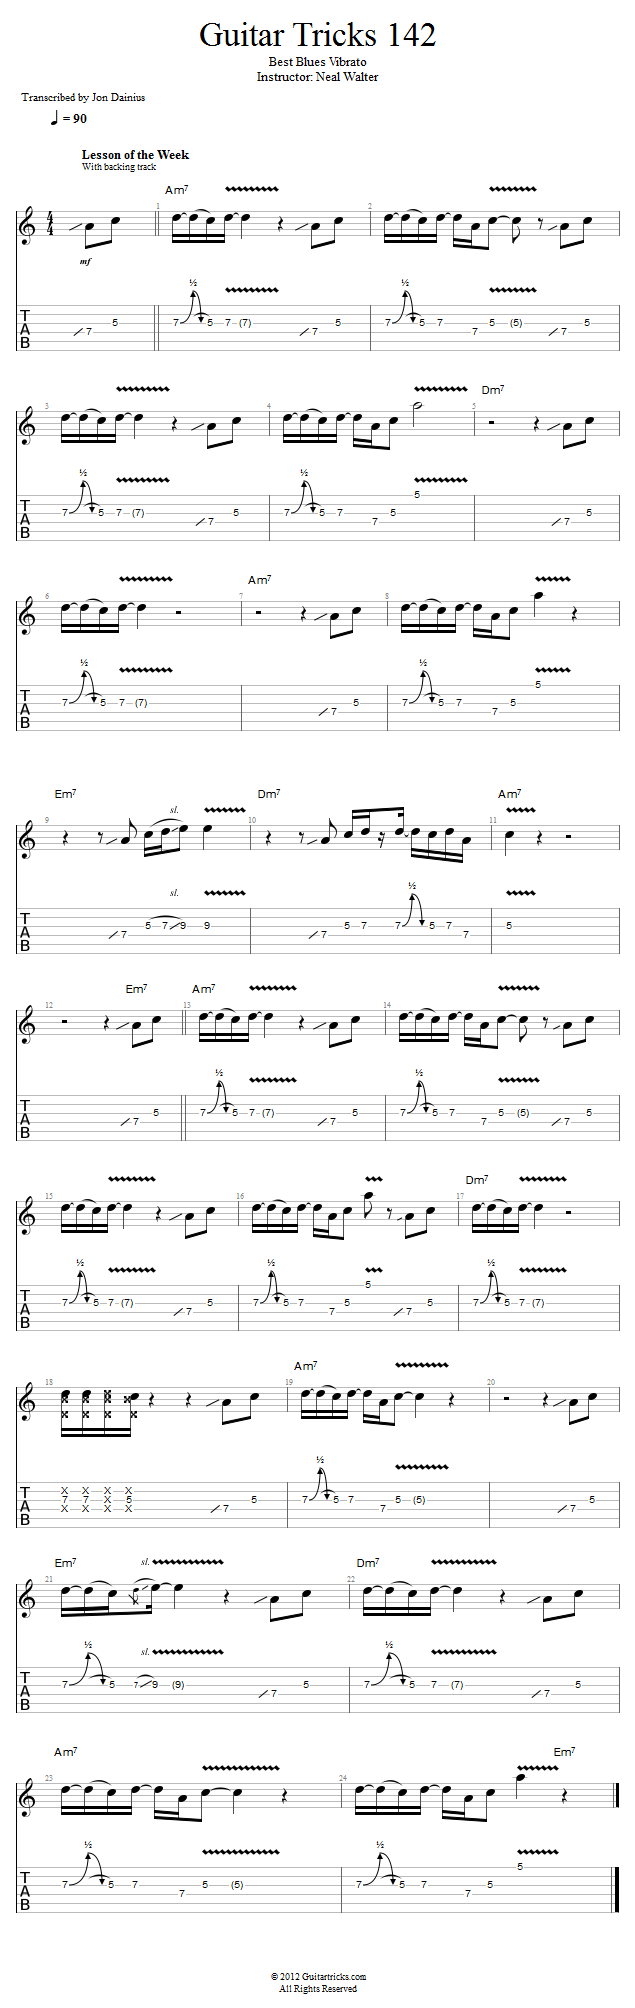 Guitar Tricks 142: Best Blues Vibrato song notation